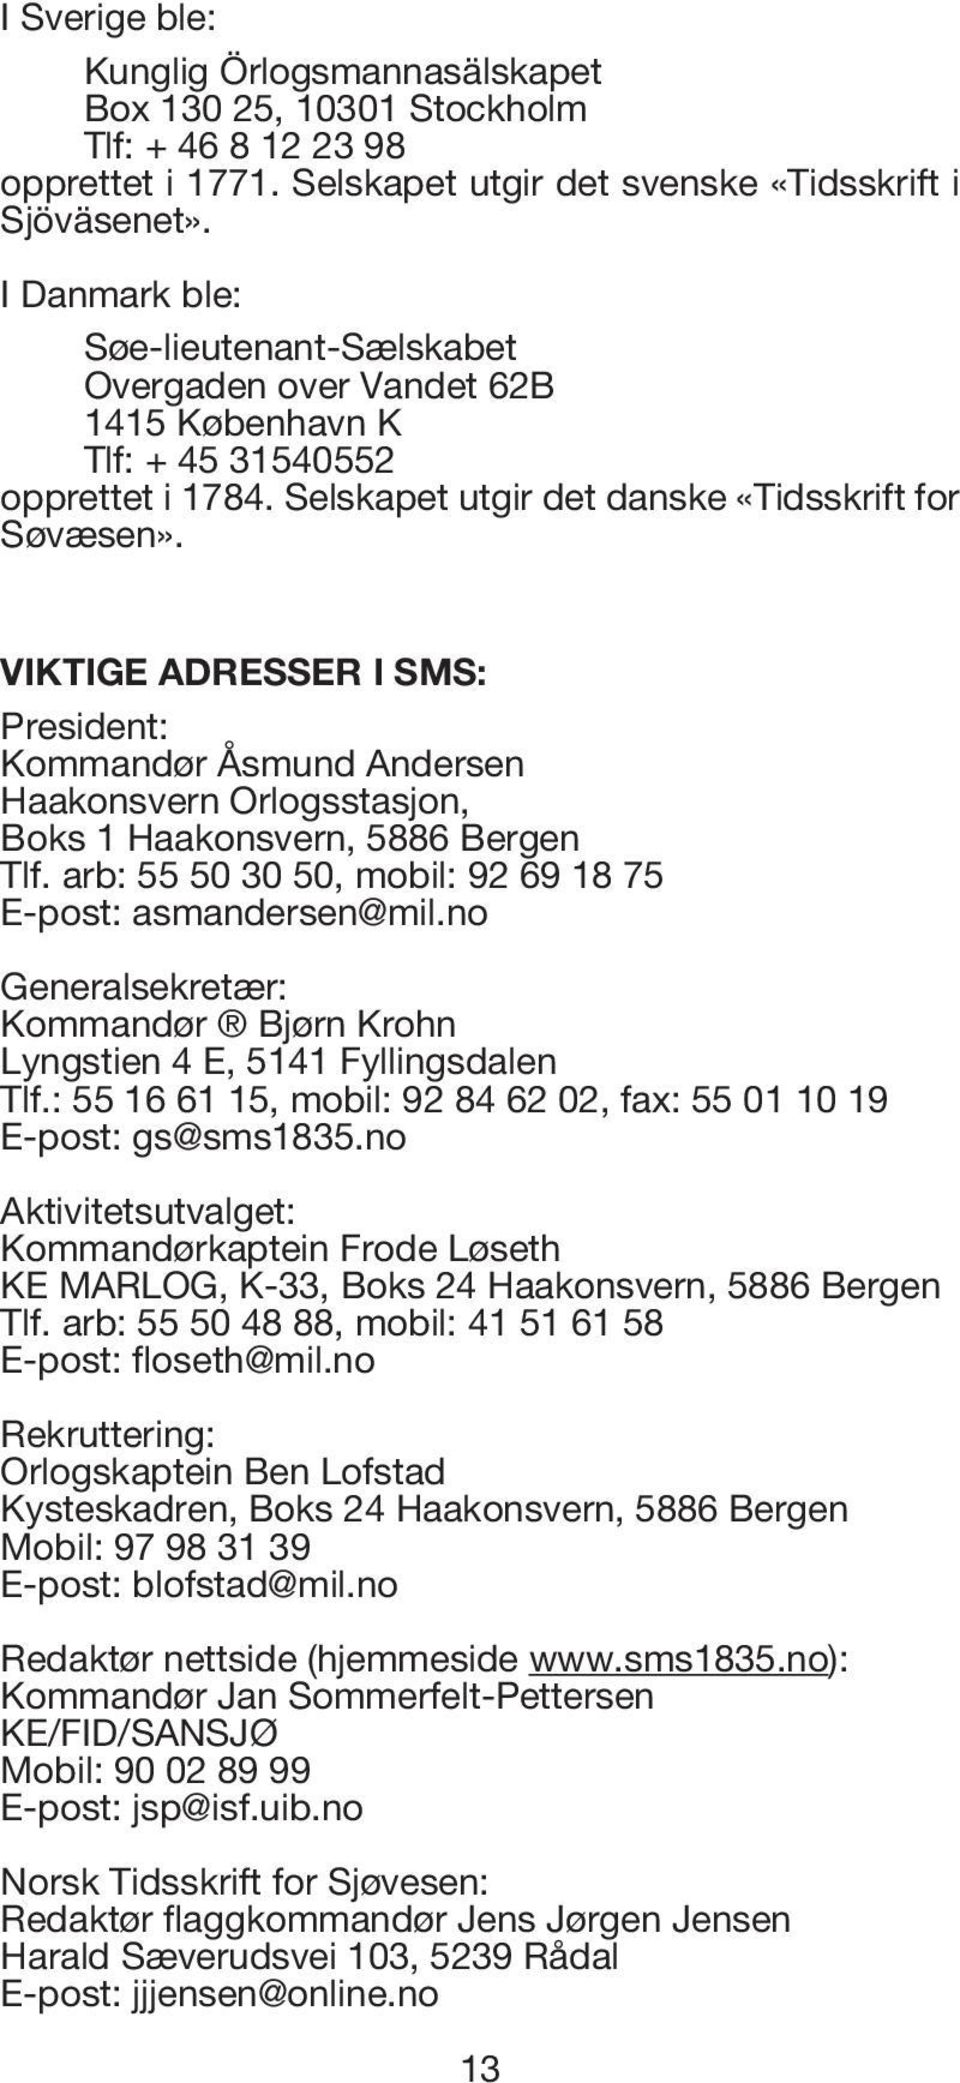 VIKTIGE ADRESSER I SMS: President: Kommandør Åsmund Andersen Haakonsvern Orlogsstasjon, Boks 1 Haakonsvern, 5886 Bergen Tlf. arb: 55 50 30 50, mobil: 92 69 18 75 E-post: asmandersen@mil.